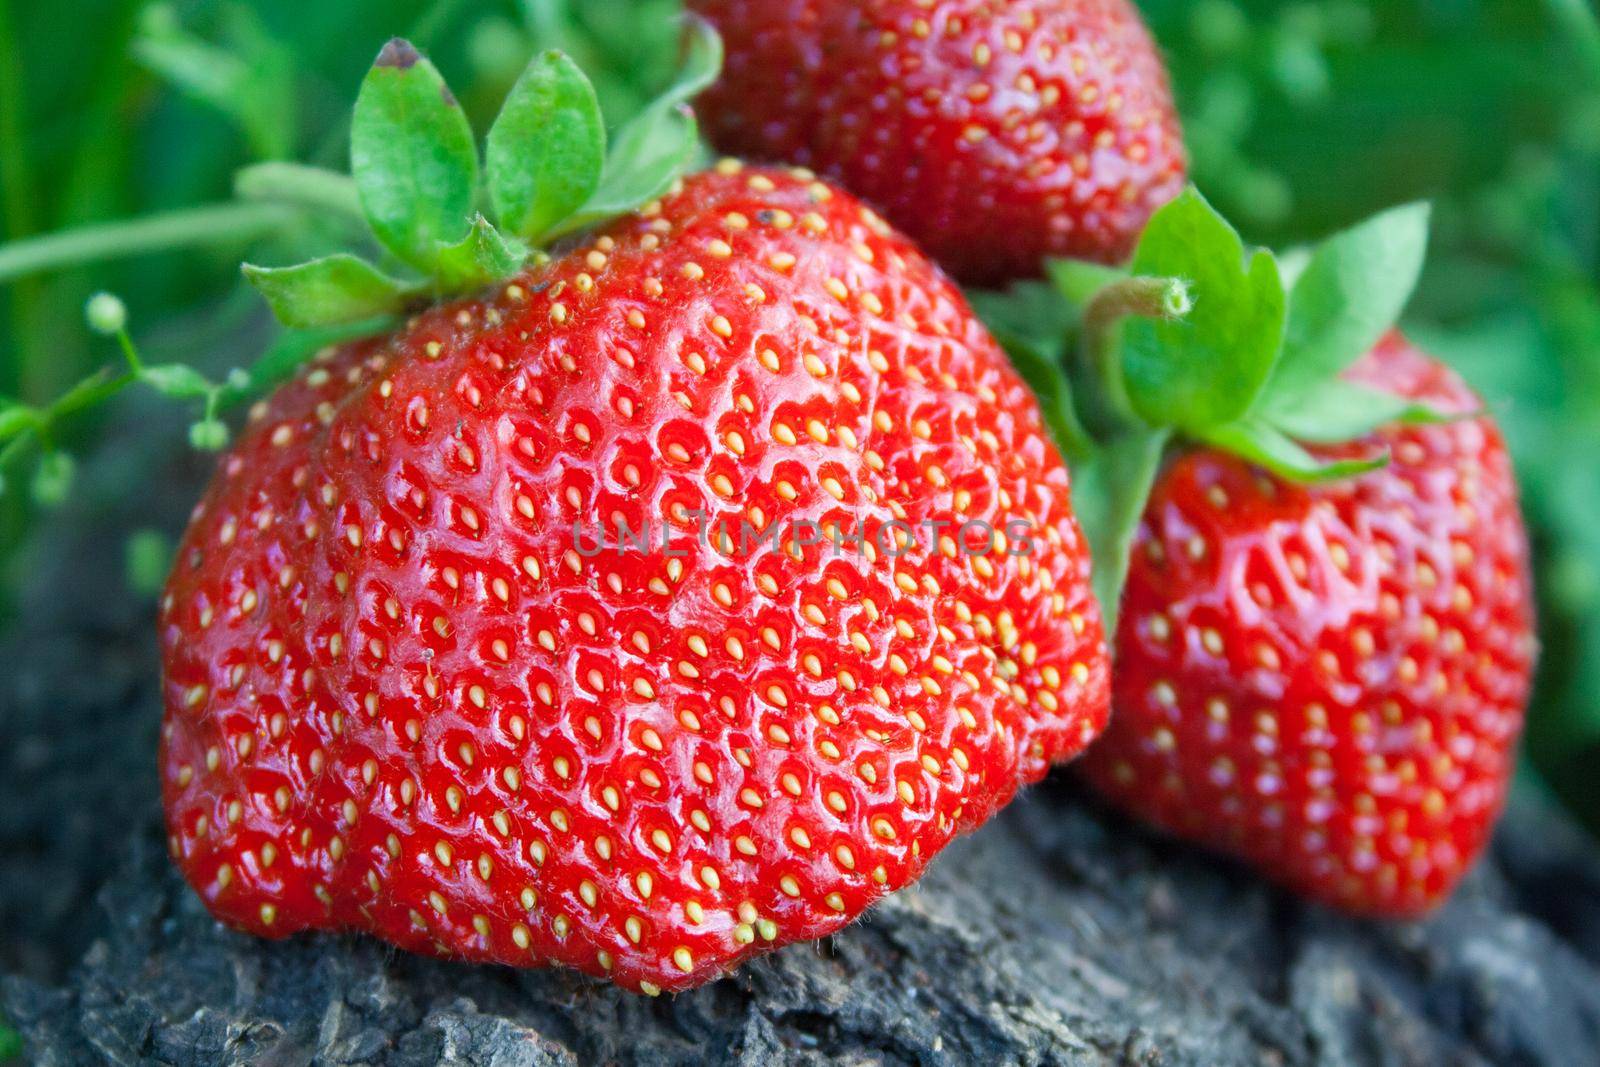 strawberry berry close up against a grass